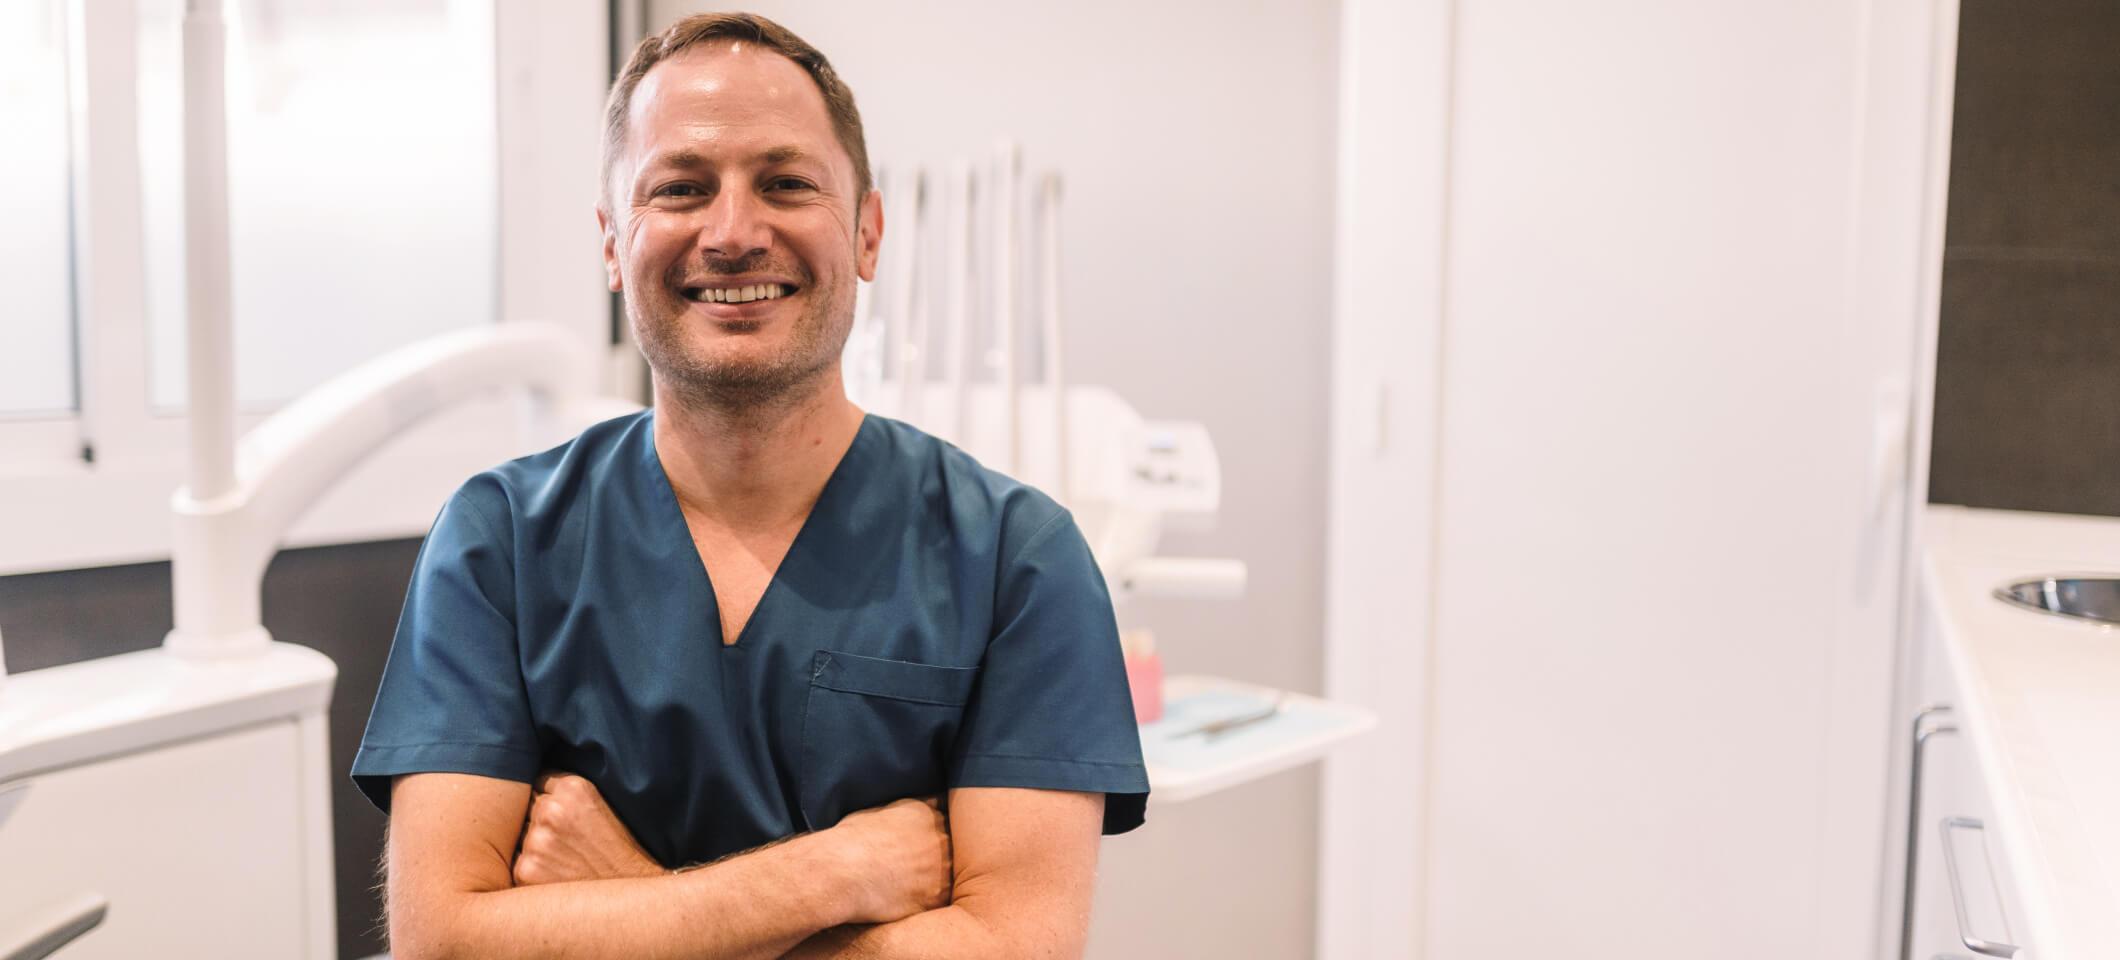 Smiling dentist poses for photo for his dental social media